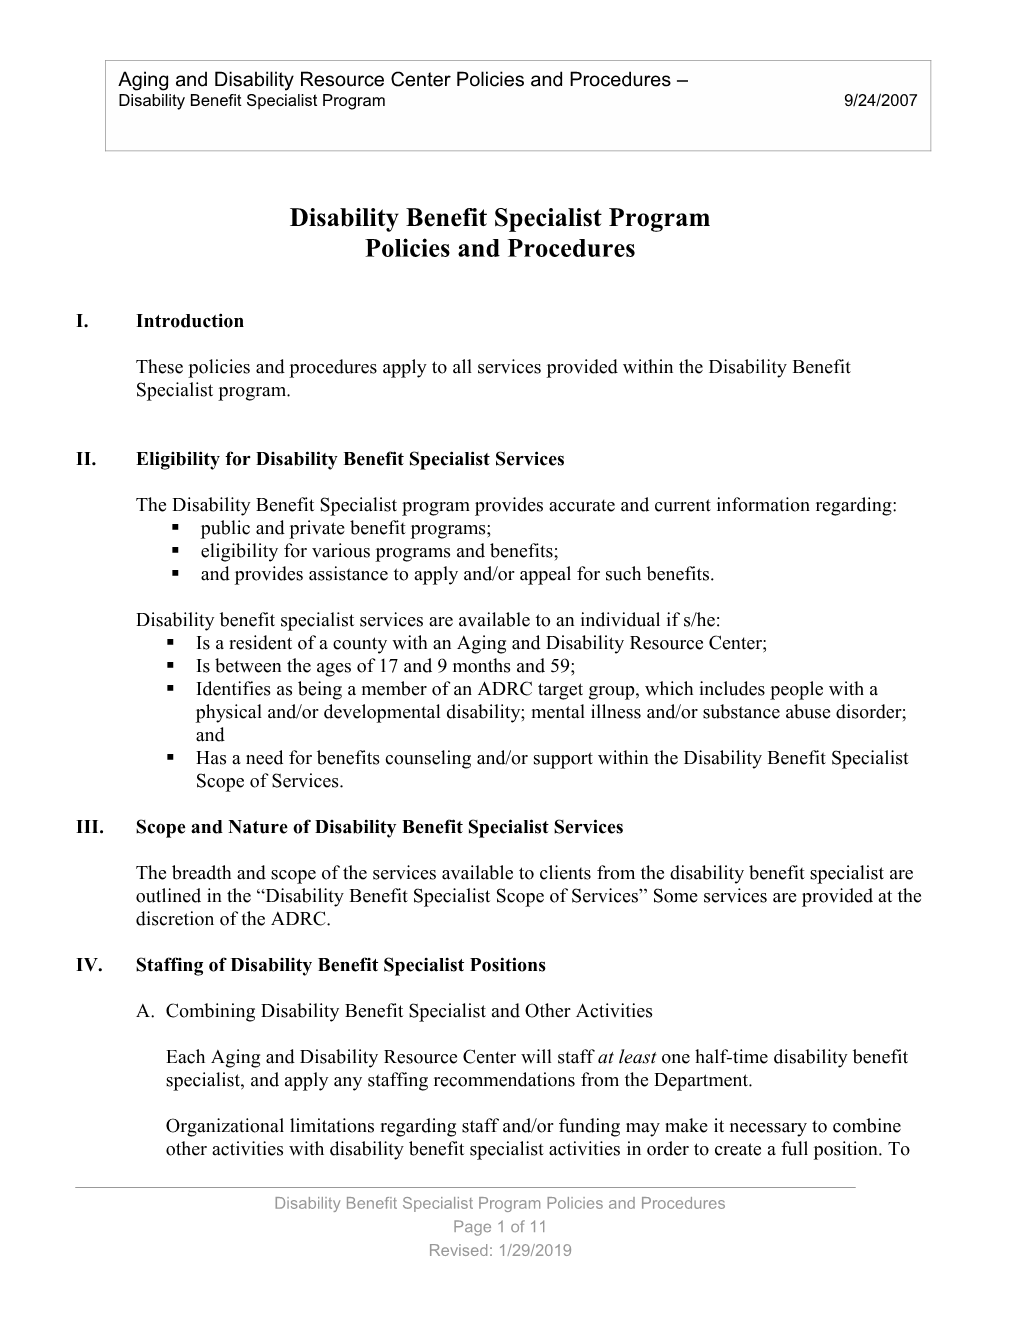 Disability Benefit Specialist Program